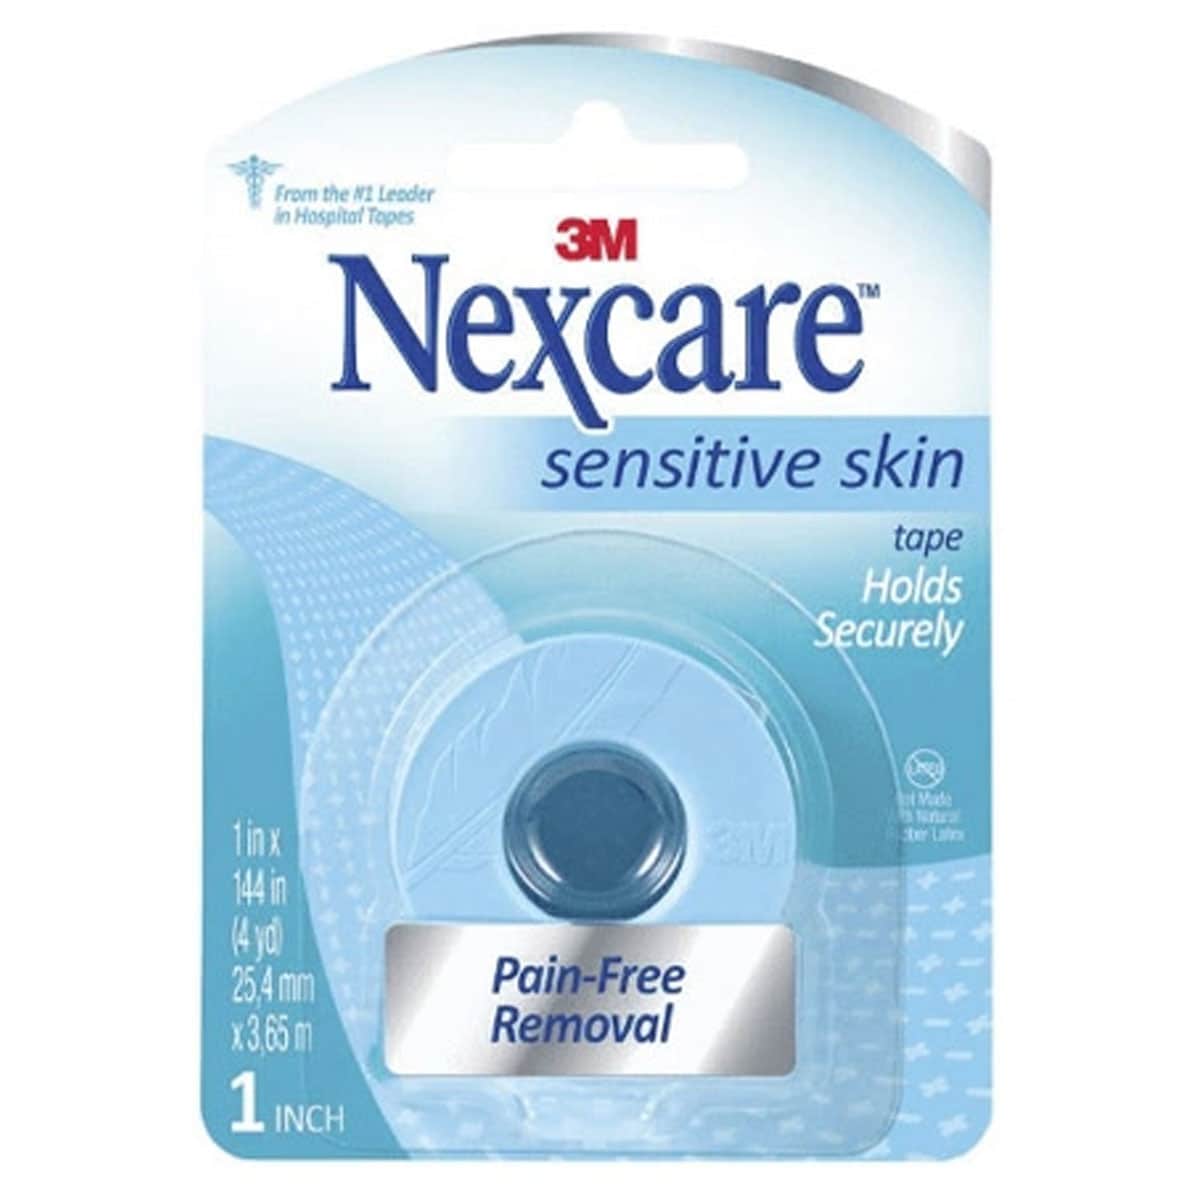 Nexcare Sensitive Skin Tape 25.4mm x 3.65m 1 Roll